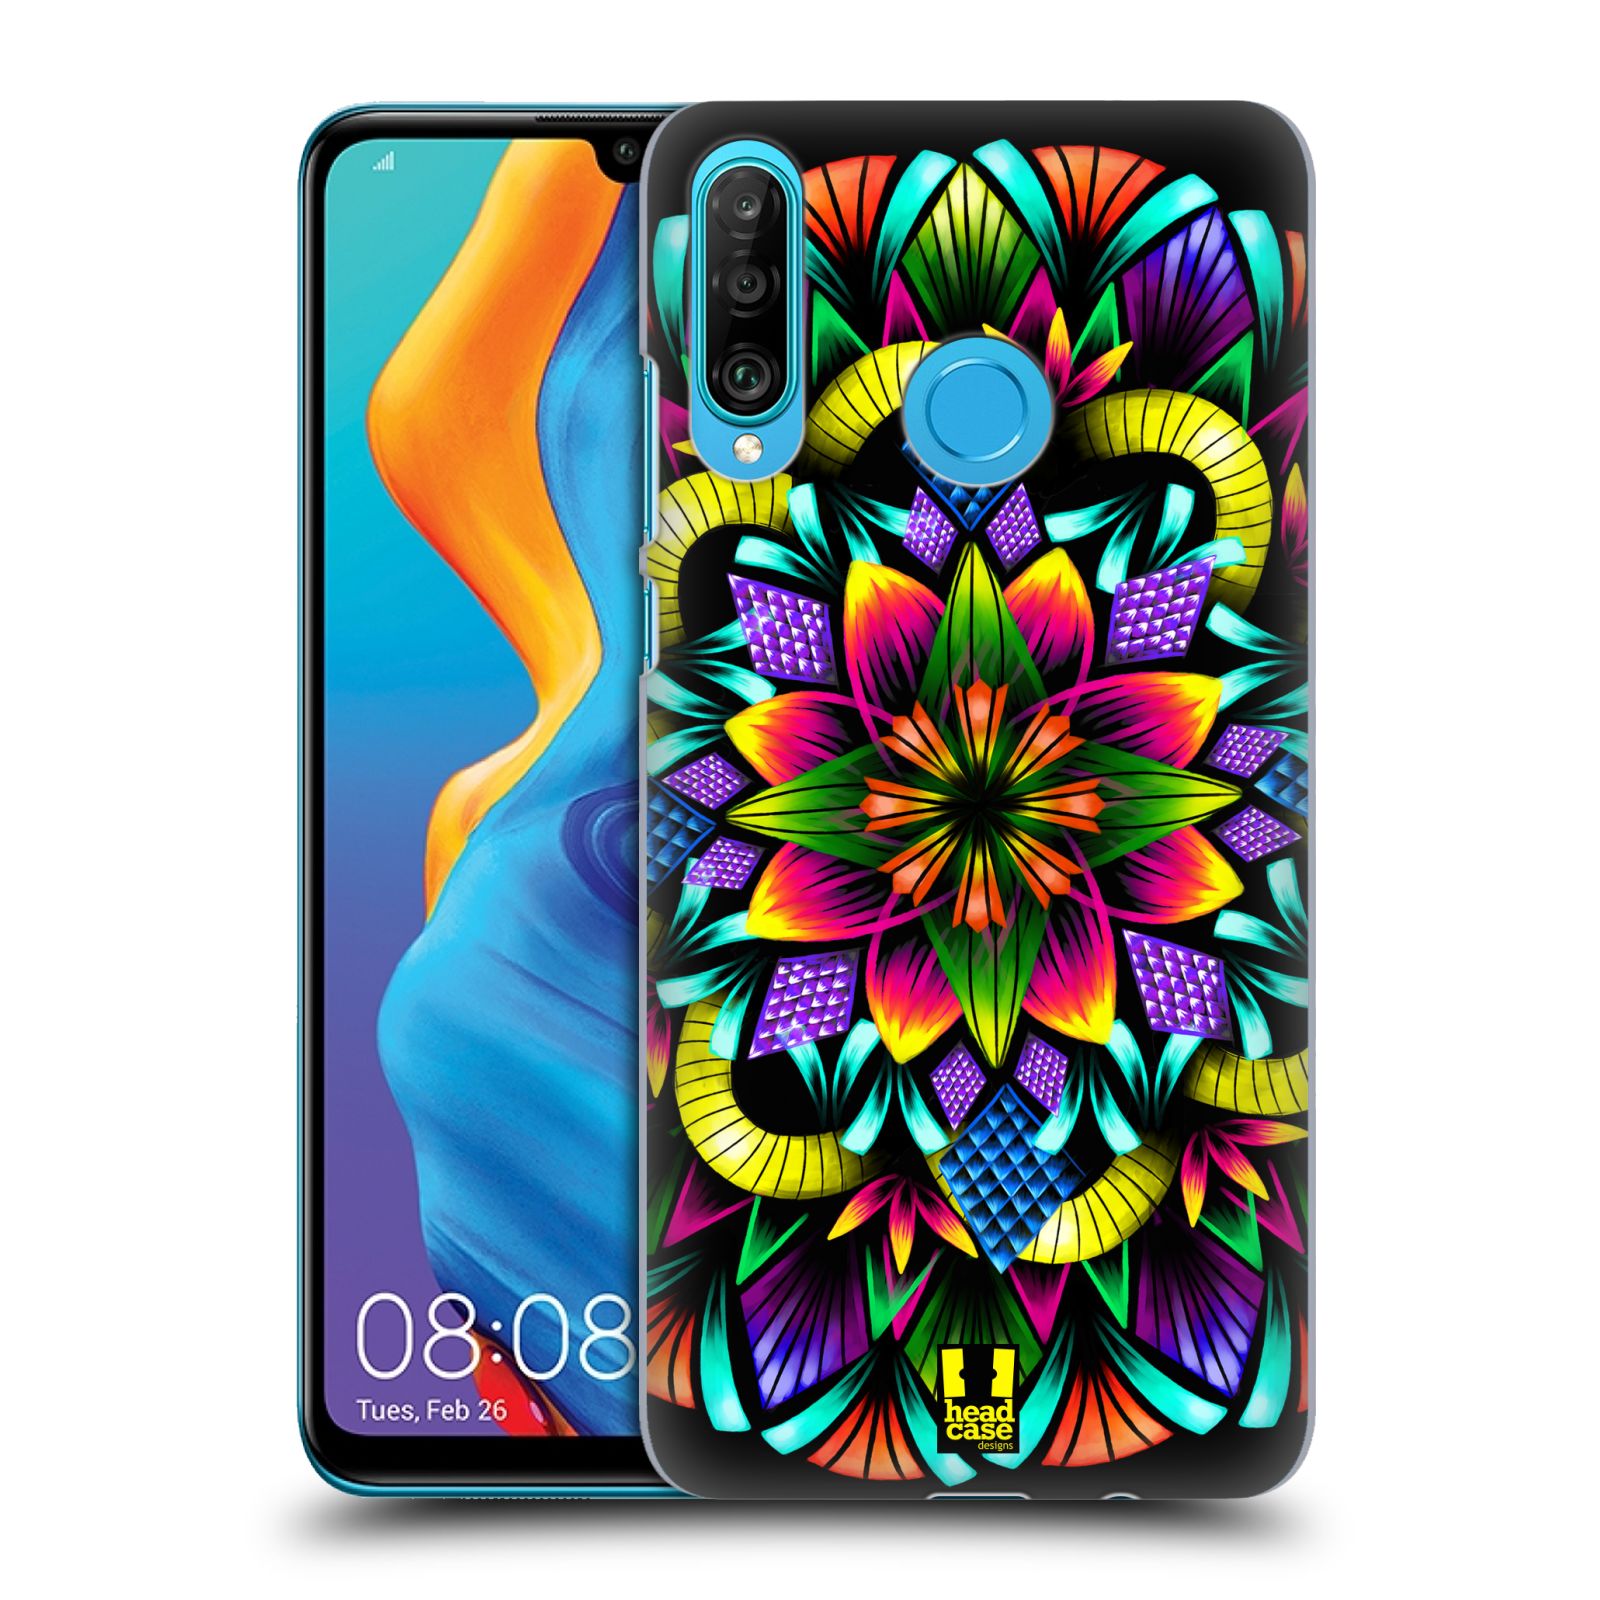 Pouzdro na mobil Huawei P30 LITE - HEAD CASE - vzor Indie Mandala kaleidoskop barevný vzor KVĚTINA